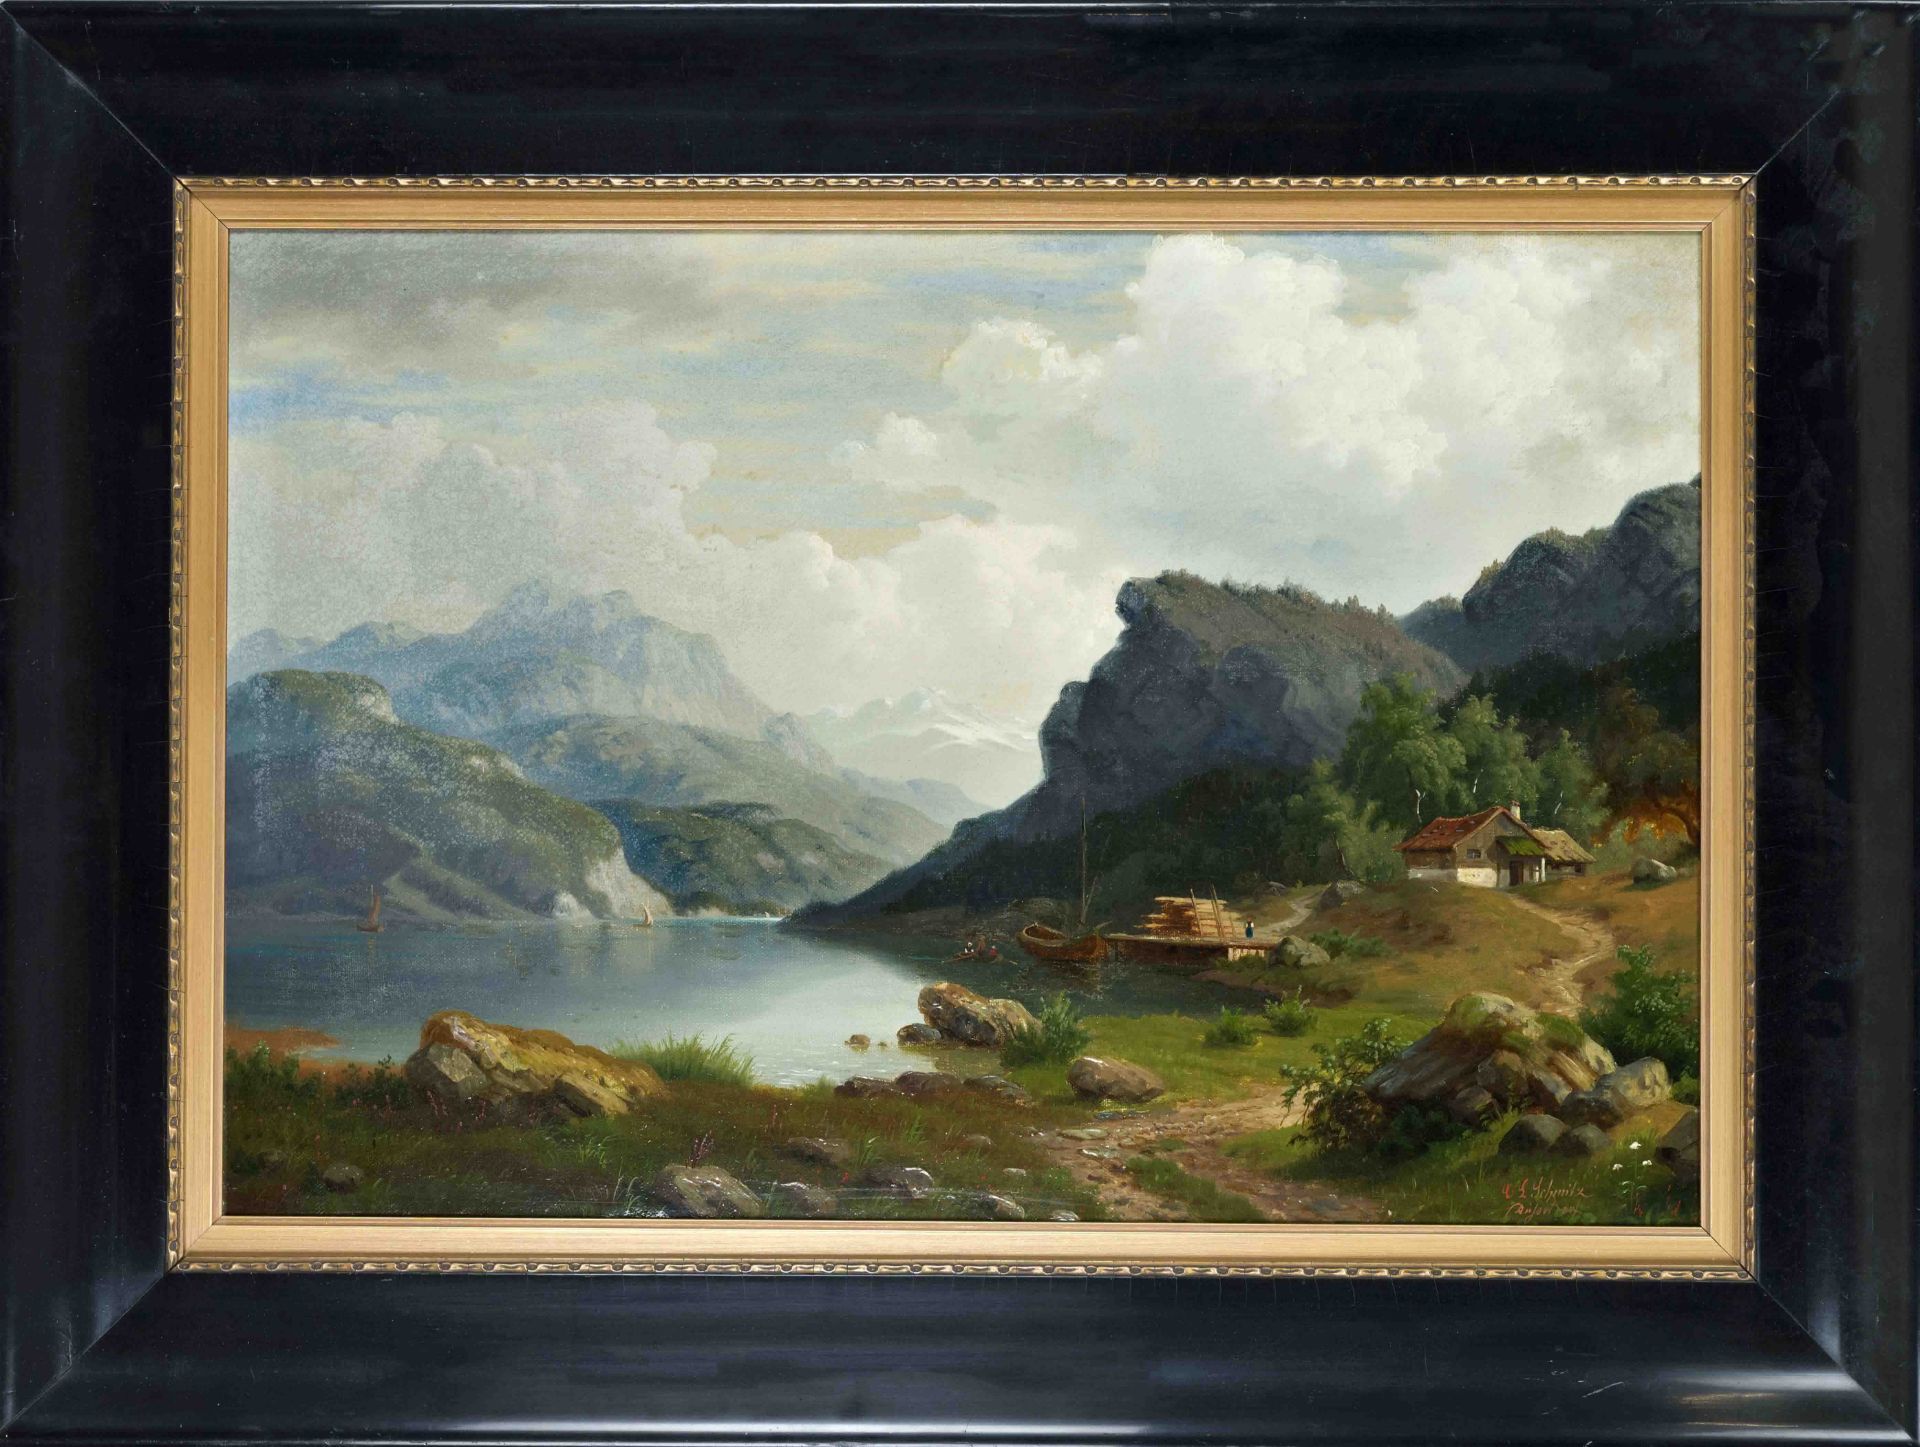 Carl Ludwig Schmitz (1817/1818-after 1859), Düsseldorf landscape painter (often given the